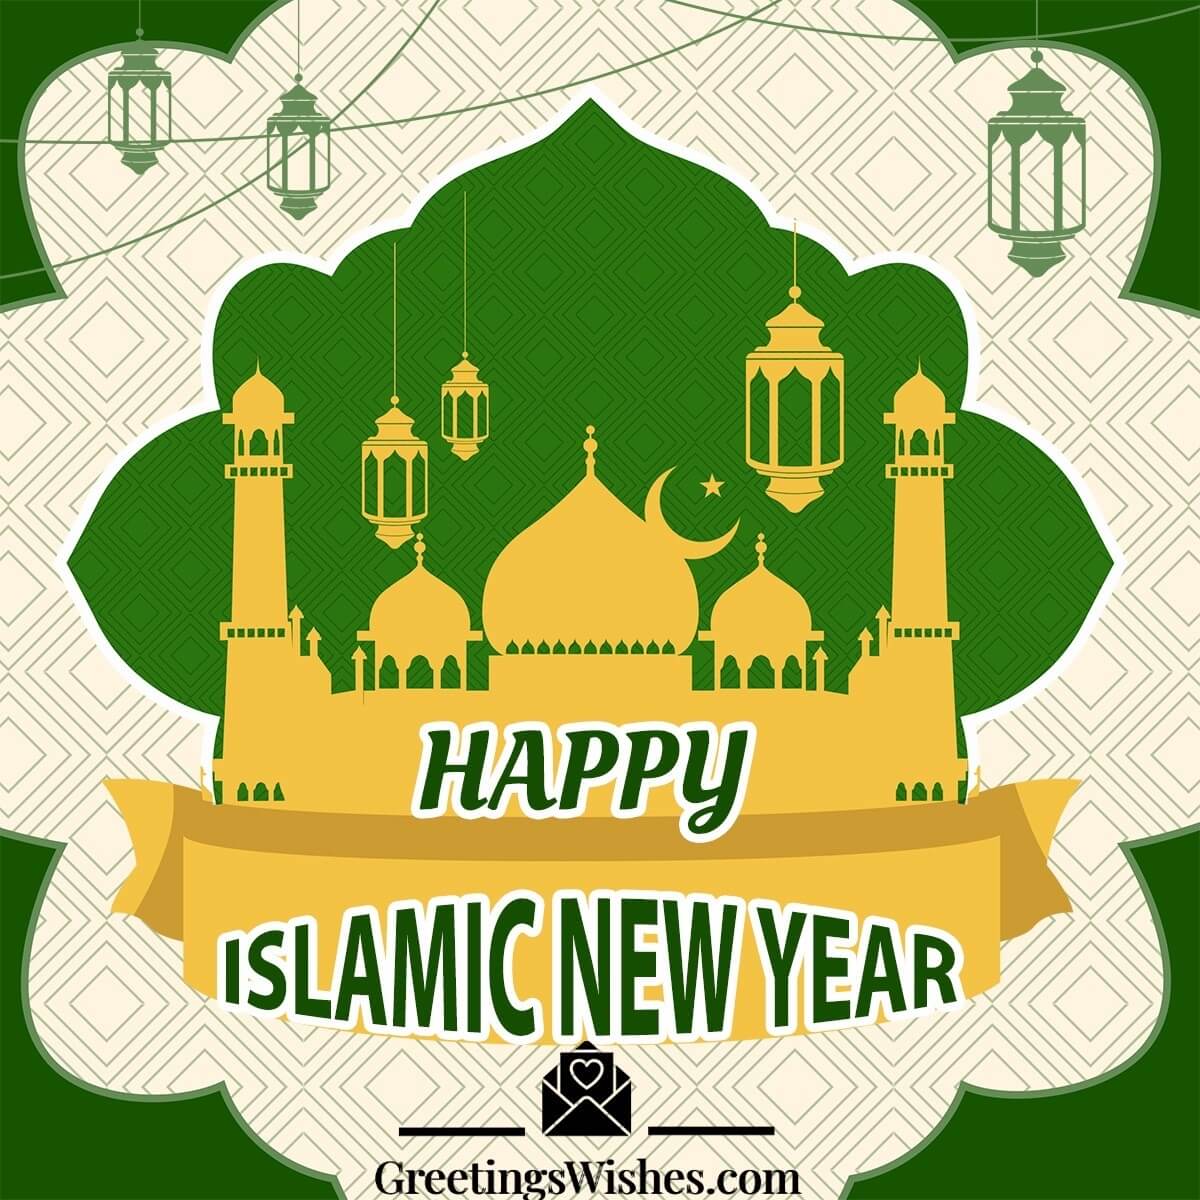 Happy Islamic New Year Image